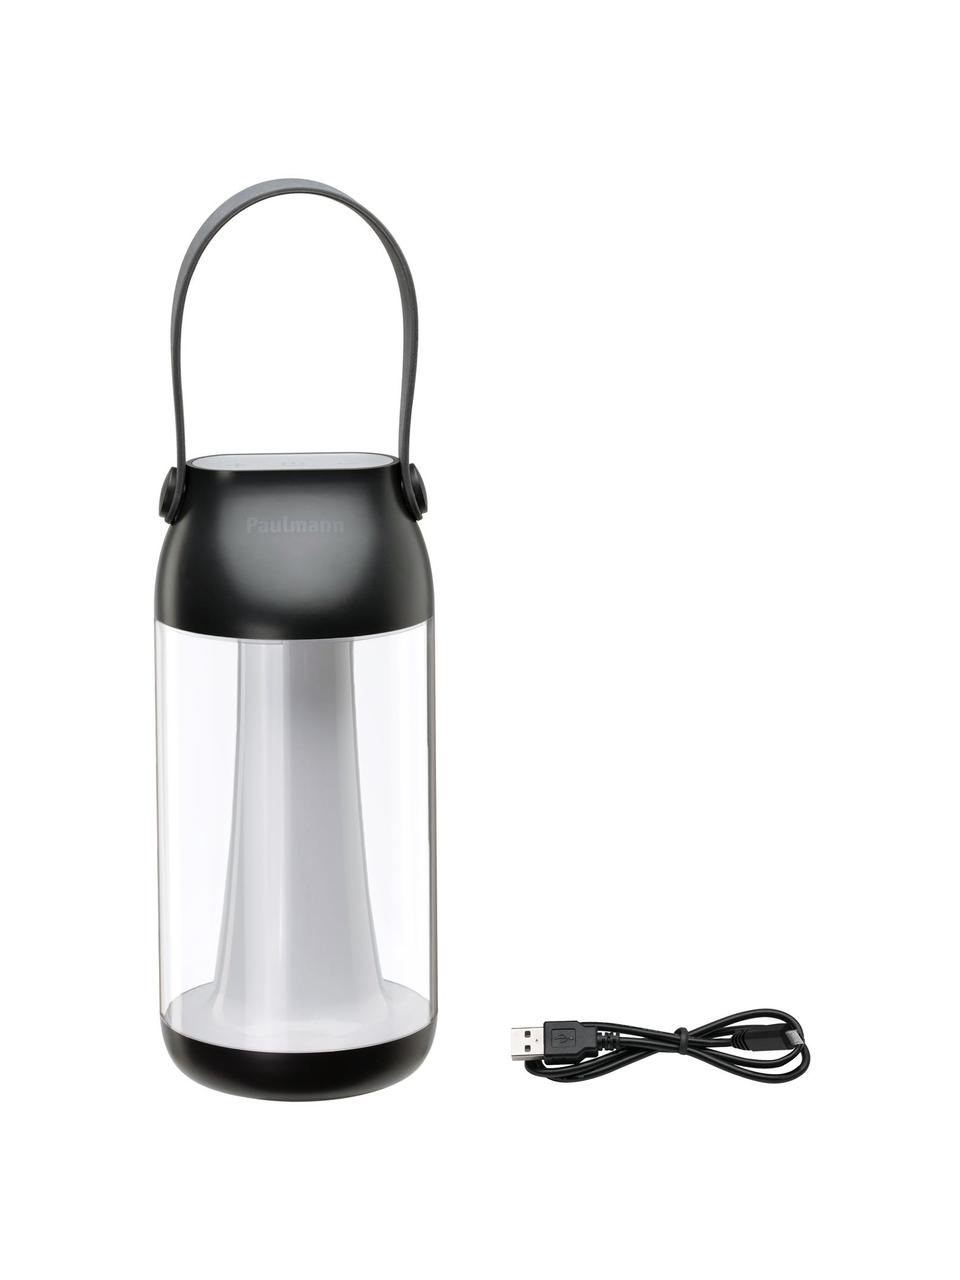 Mobile Dimmbare Aussentischlampe Capulino, Lampenschirm: Kunststoff, Griff: Kunststoff, Transparent, Anthrazit, Ø 8 cm, H 18 cm